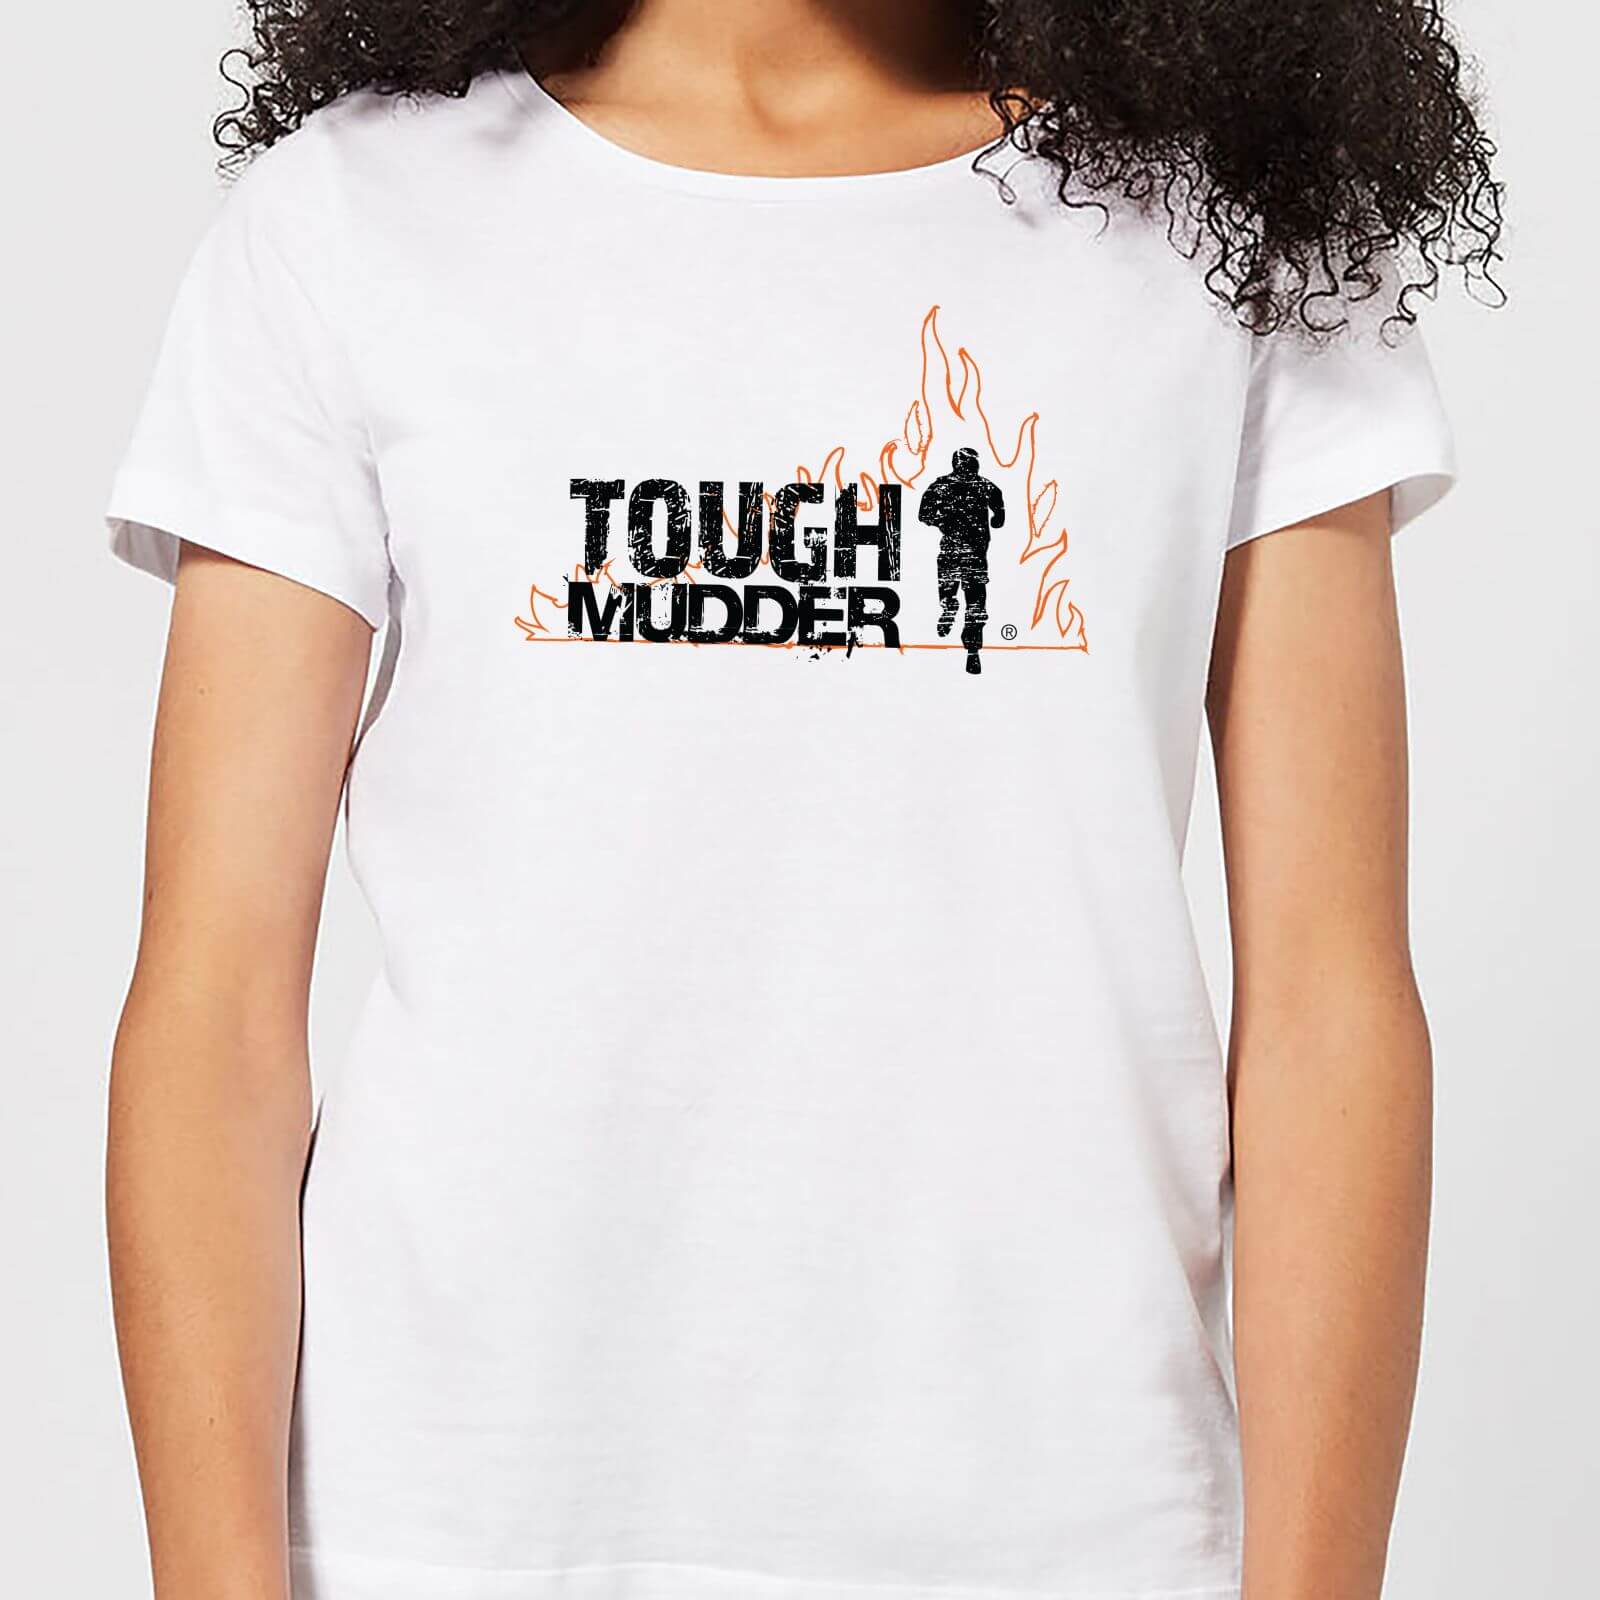 Tough Mudder Logo Women's T-Shirt - White - S - White